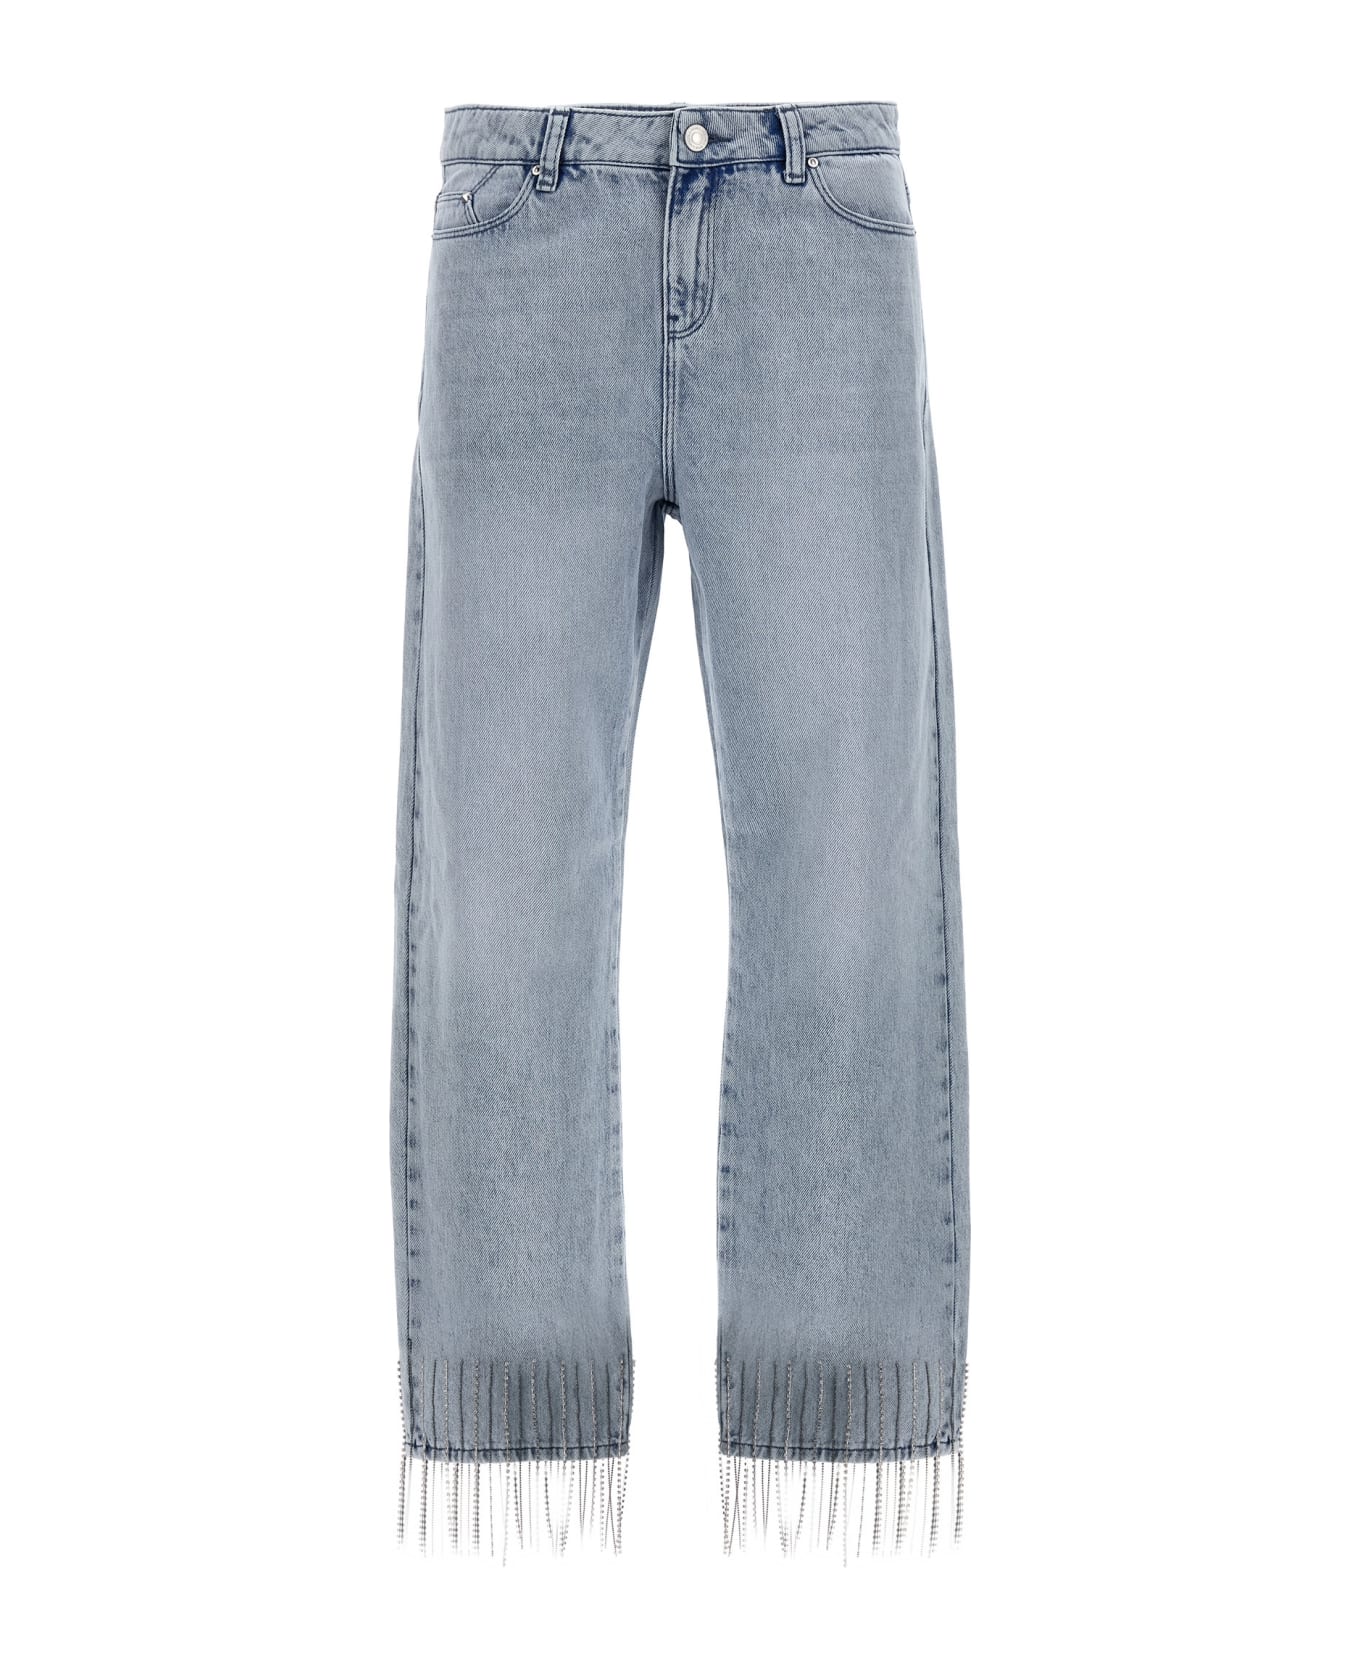 Karl Lagerfeld Rhinestone Fringed Jeans - Light Blue